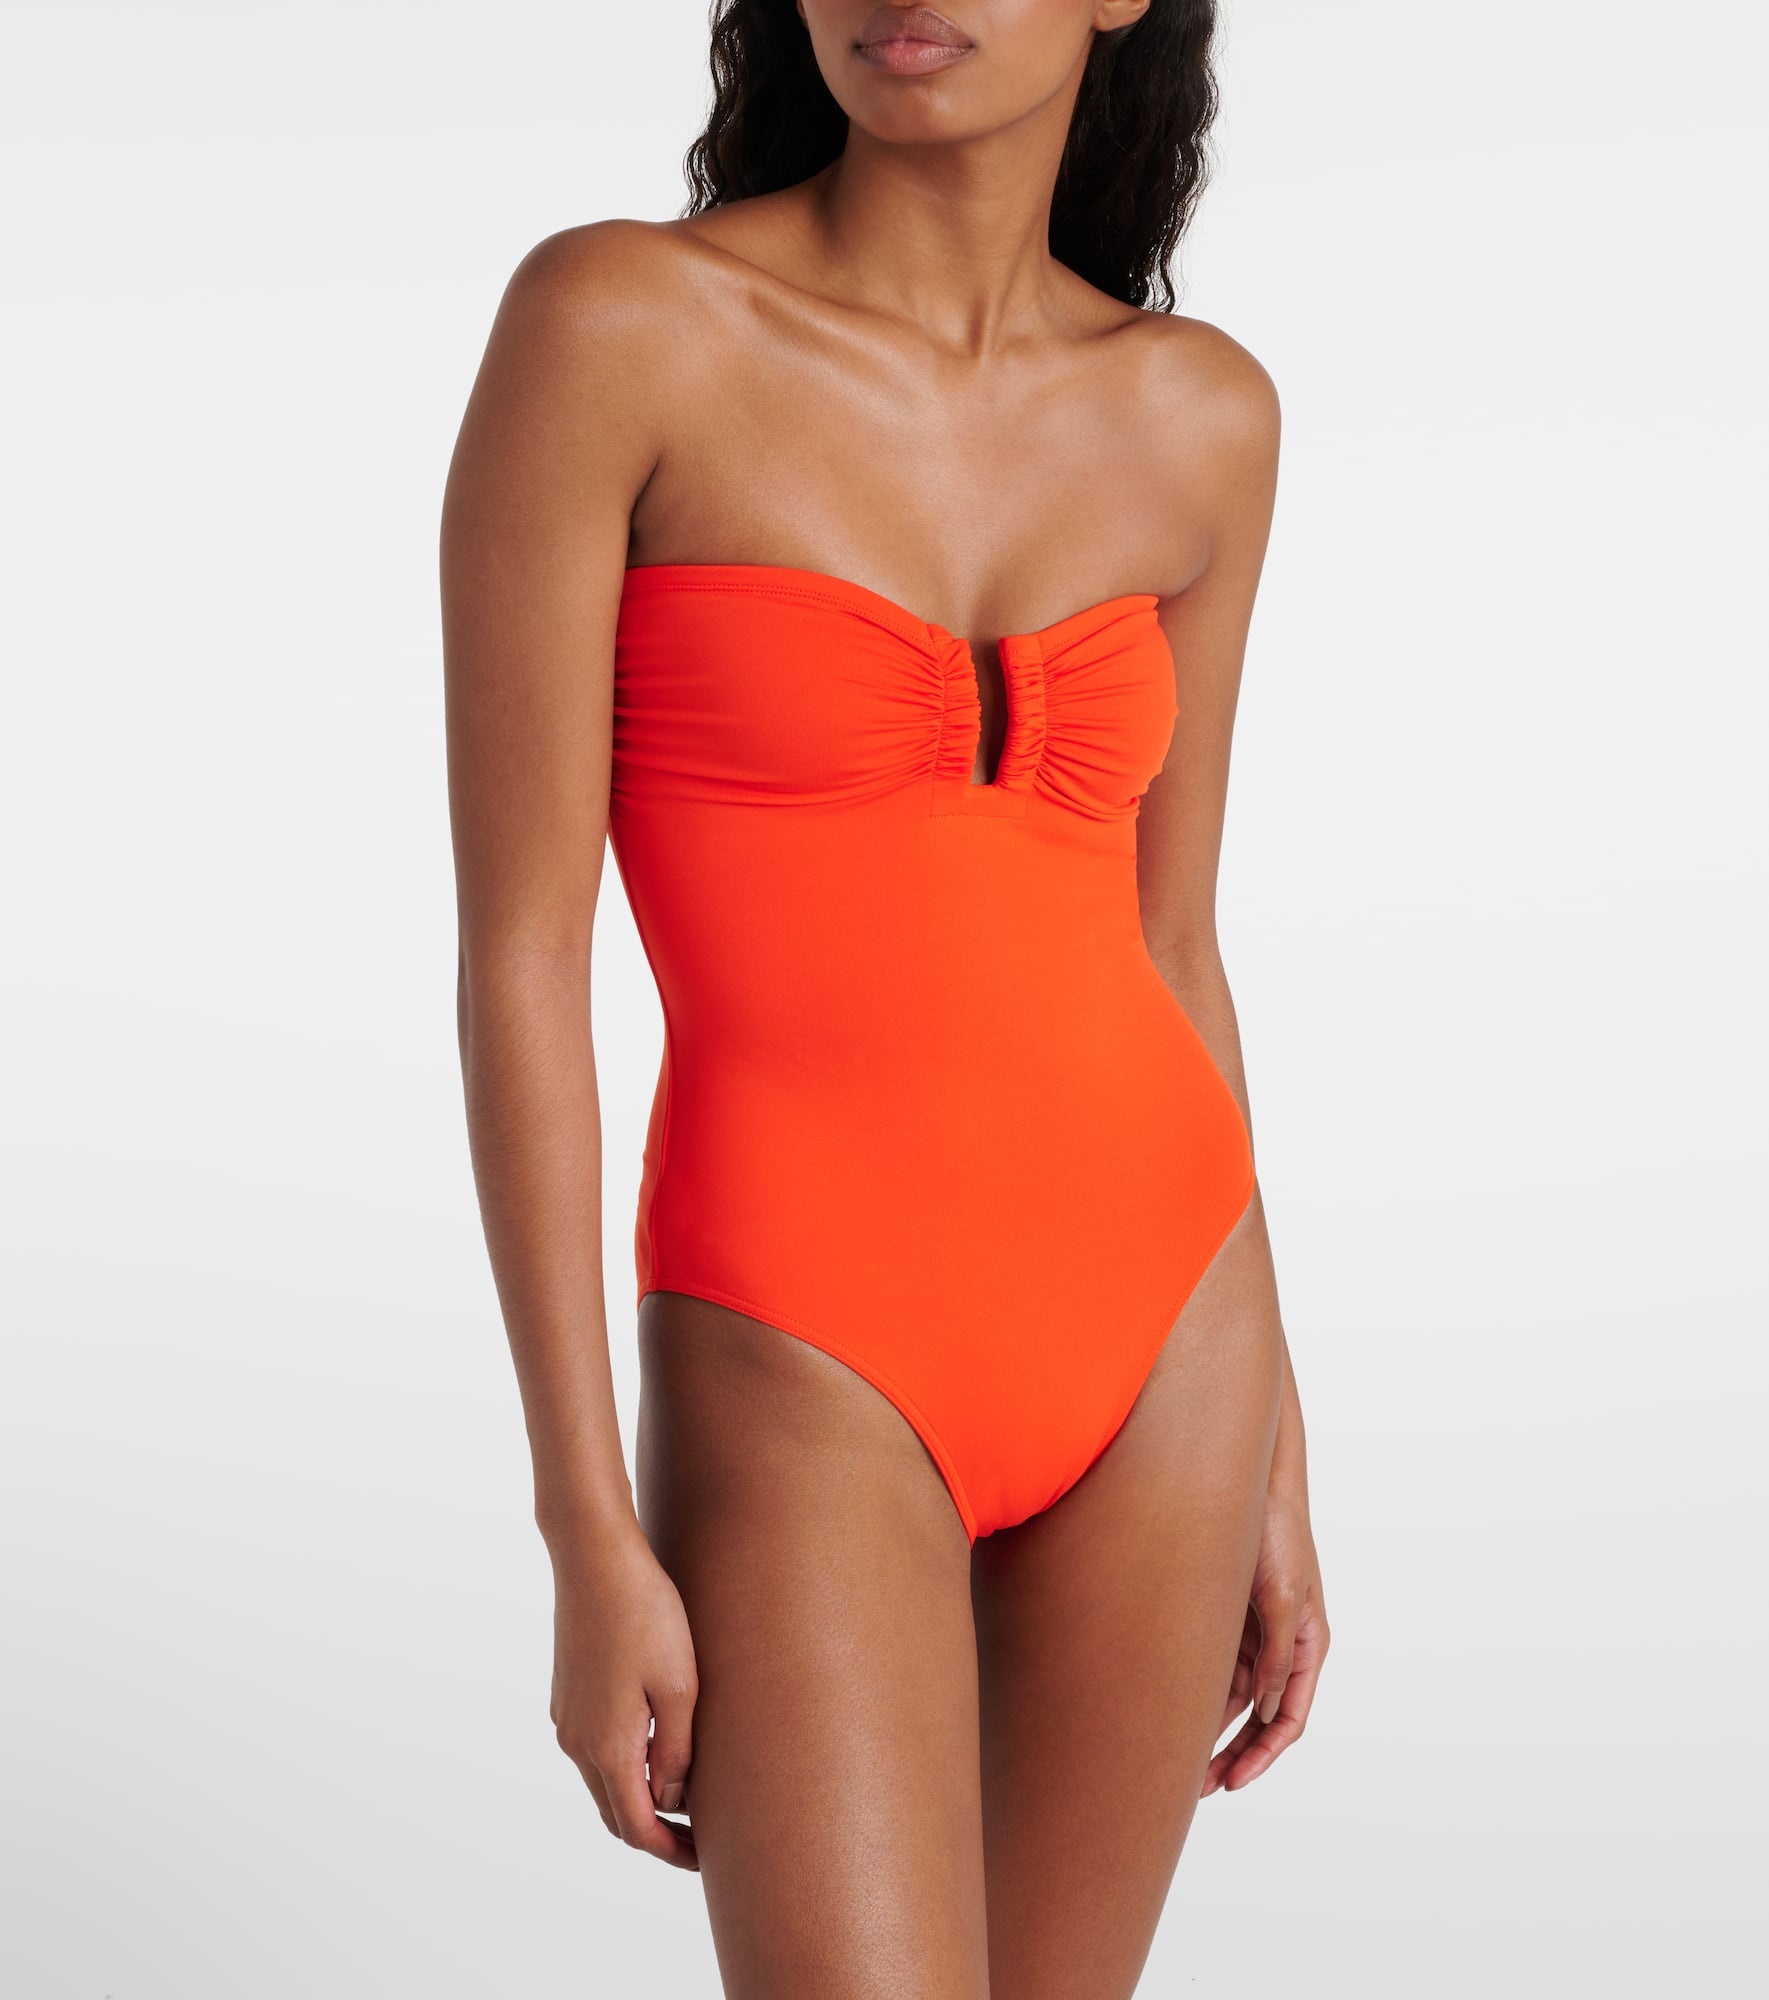 Cassiopée strapless bustier swimsuit - 2